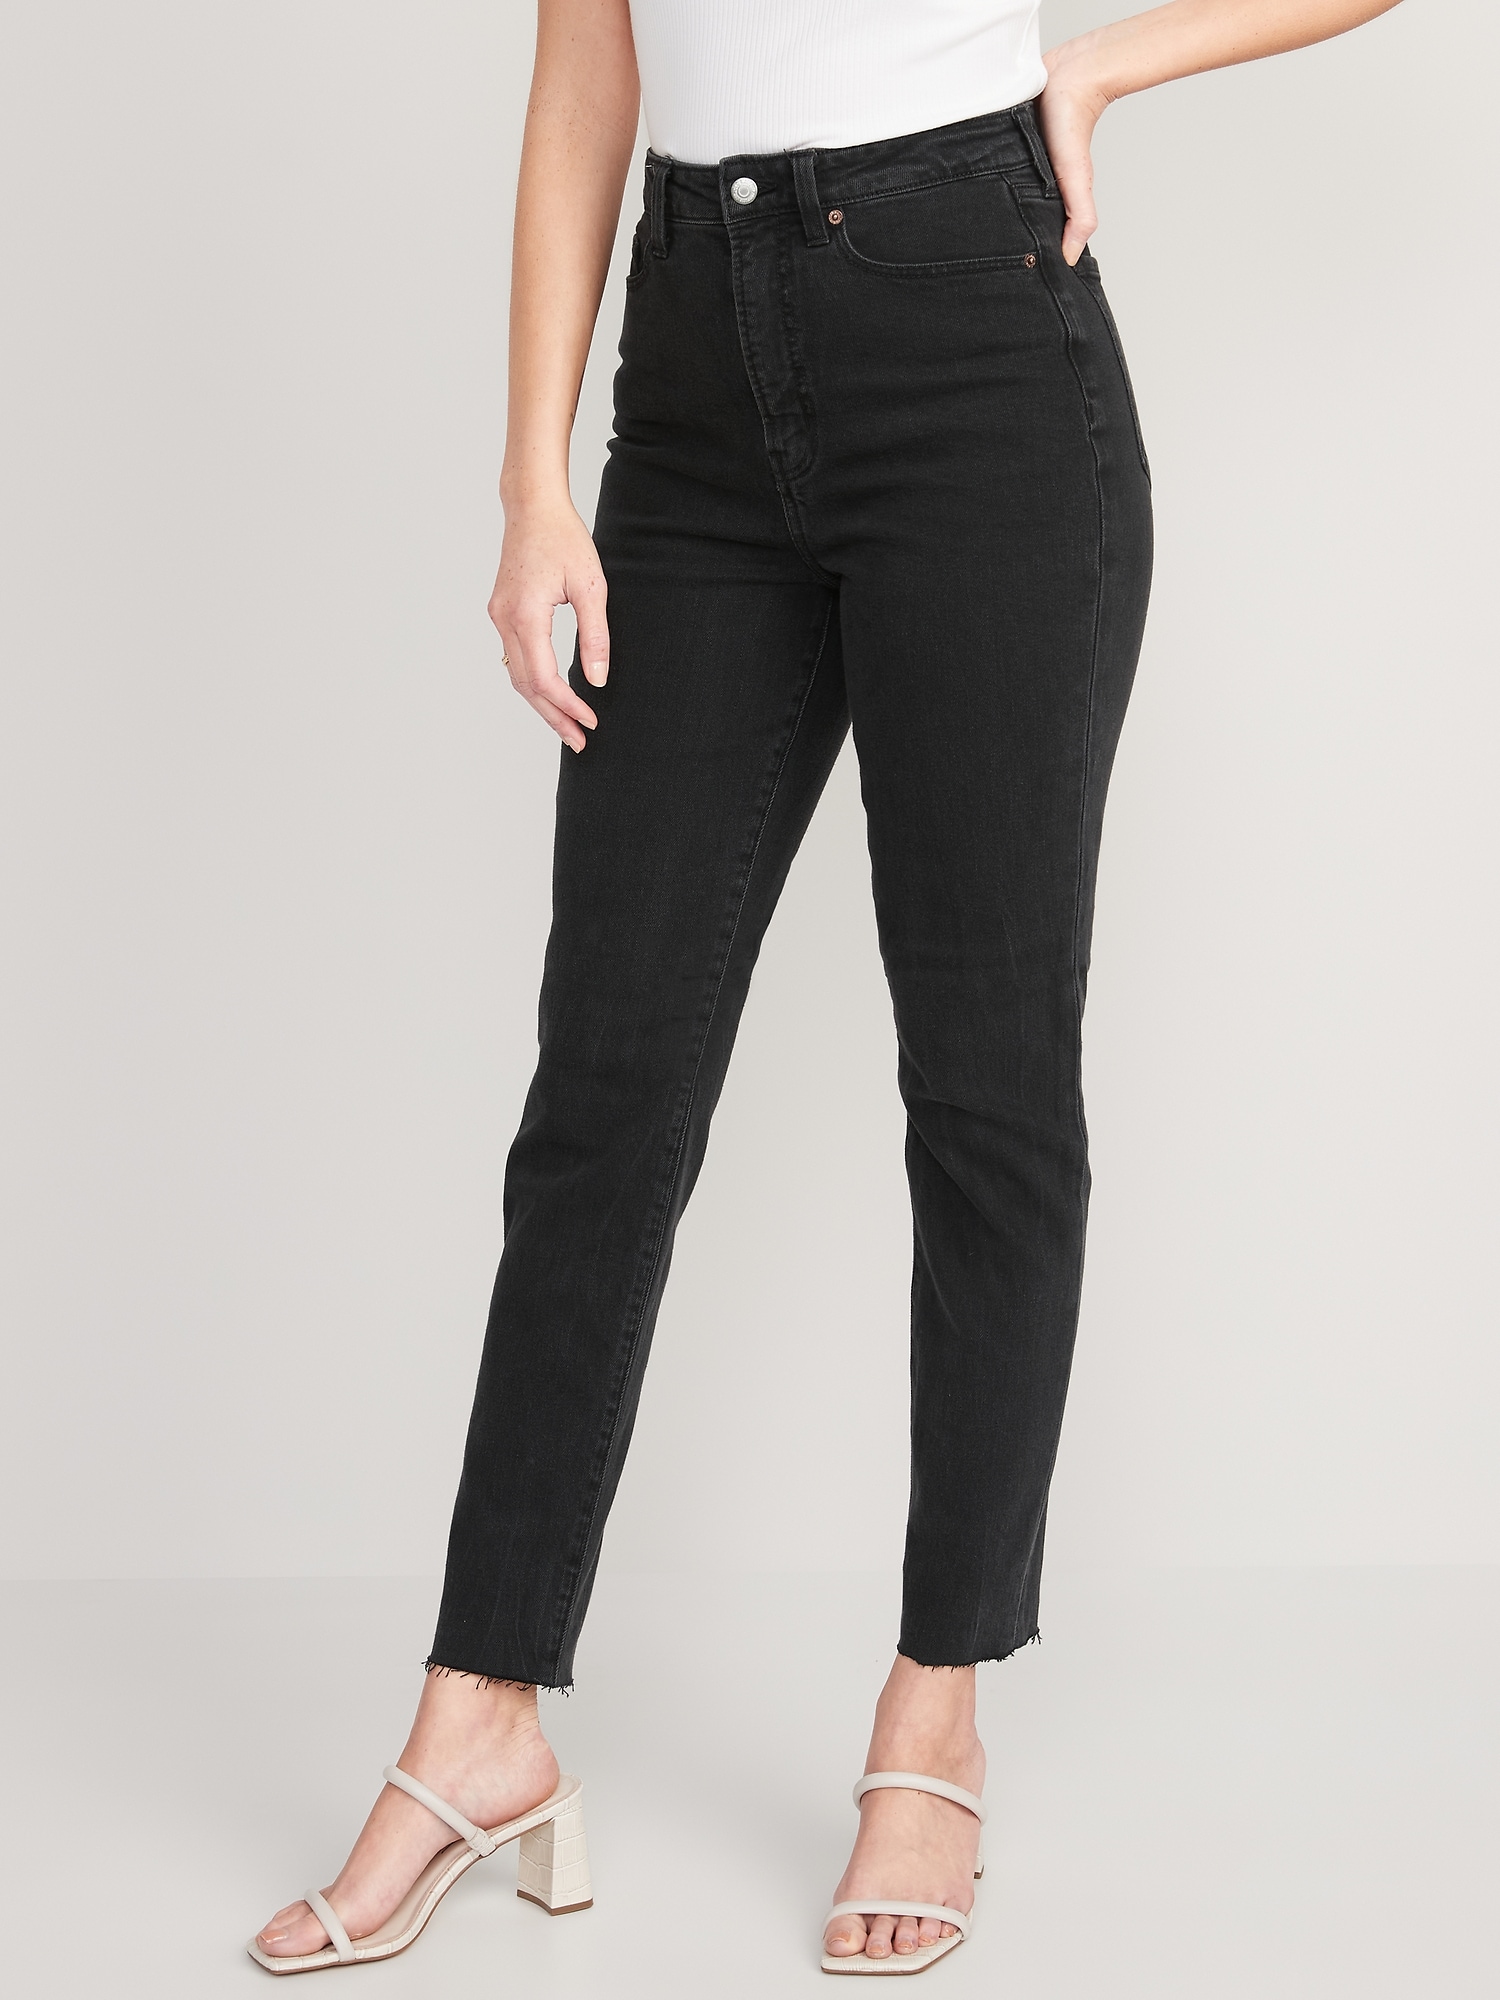 Old Navy Higher High-Waisted OG Straight Cut-Off Black Ankle Jeans for Women black. 1